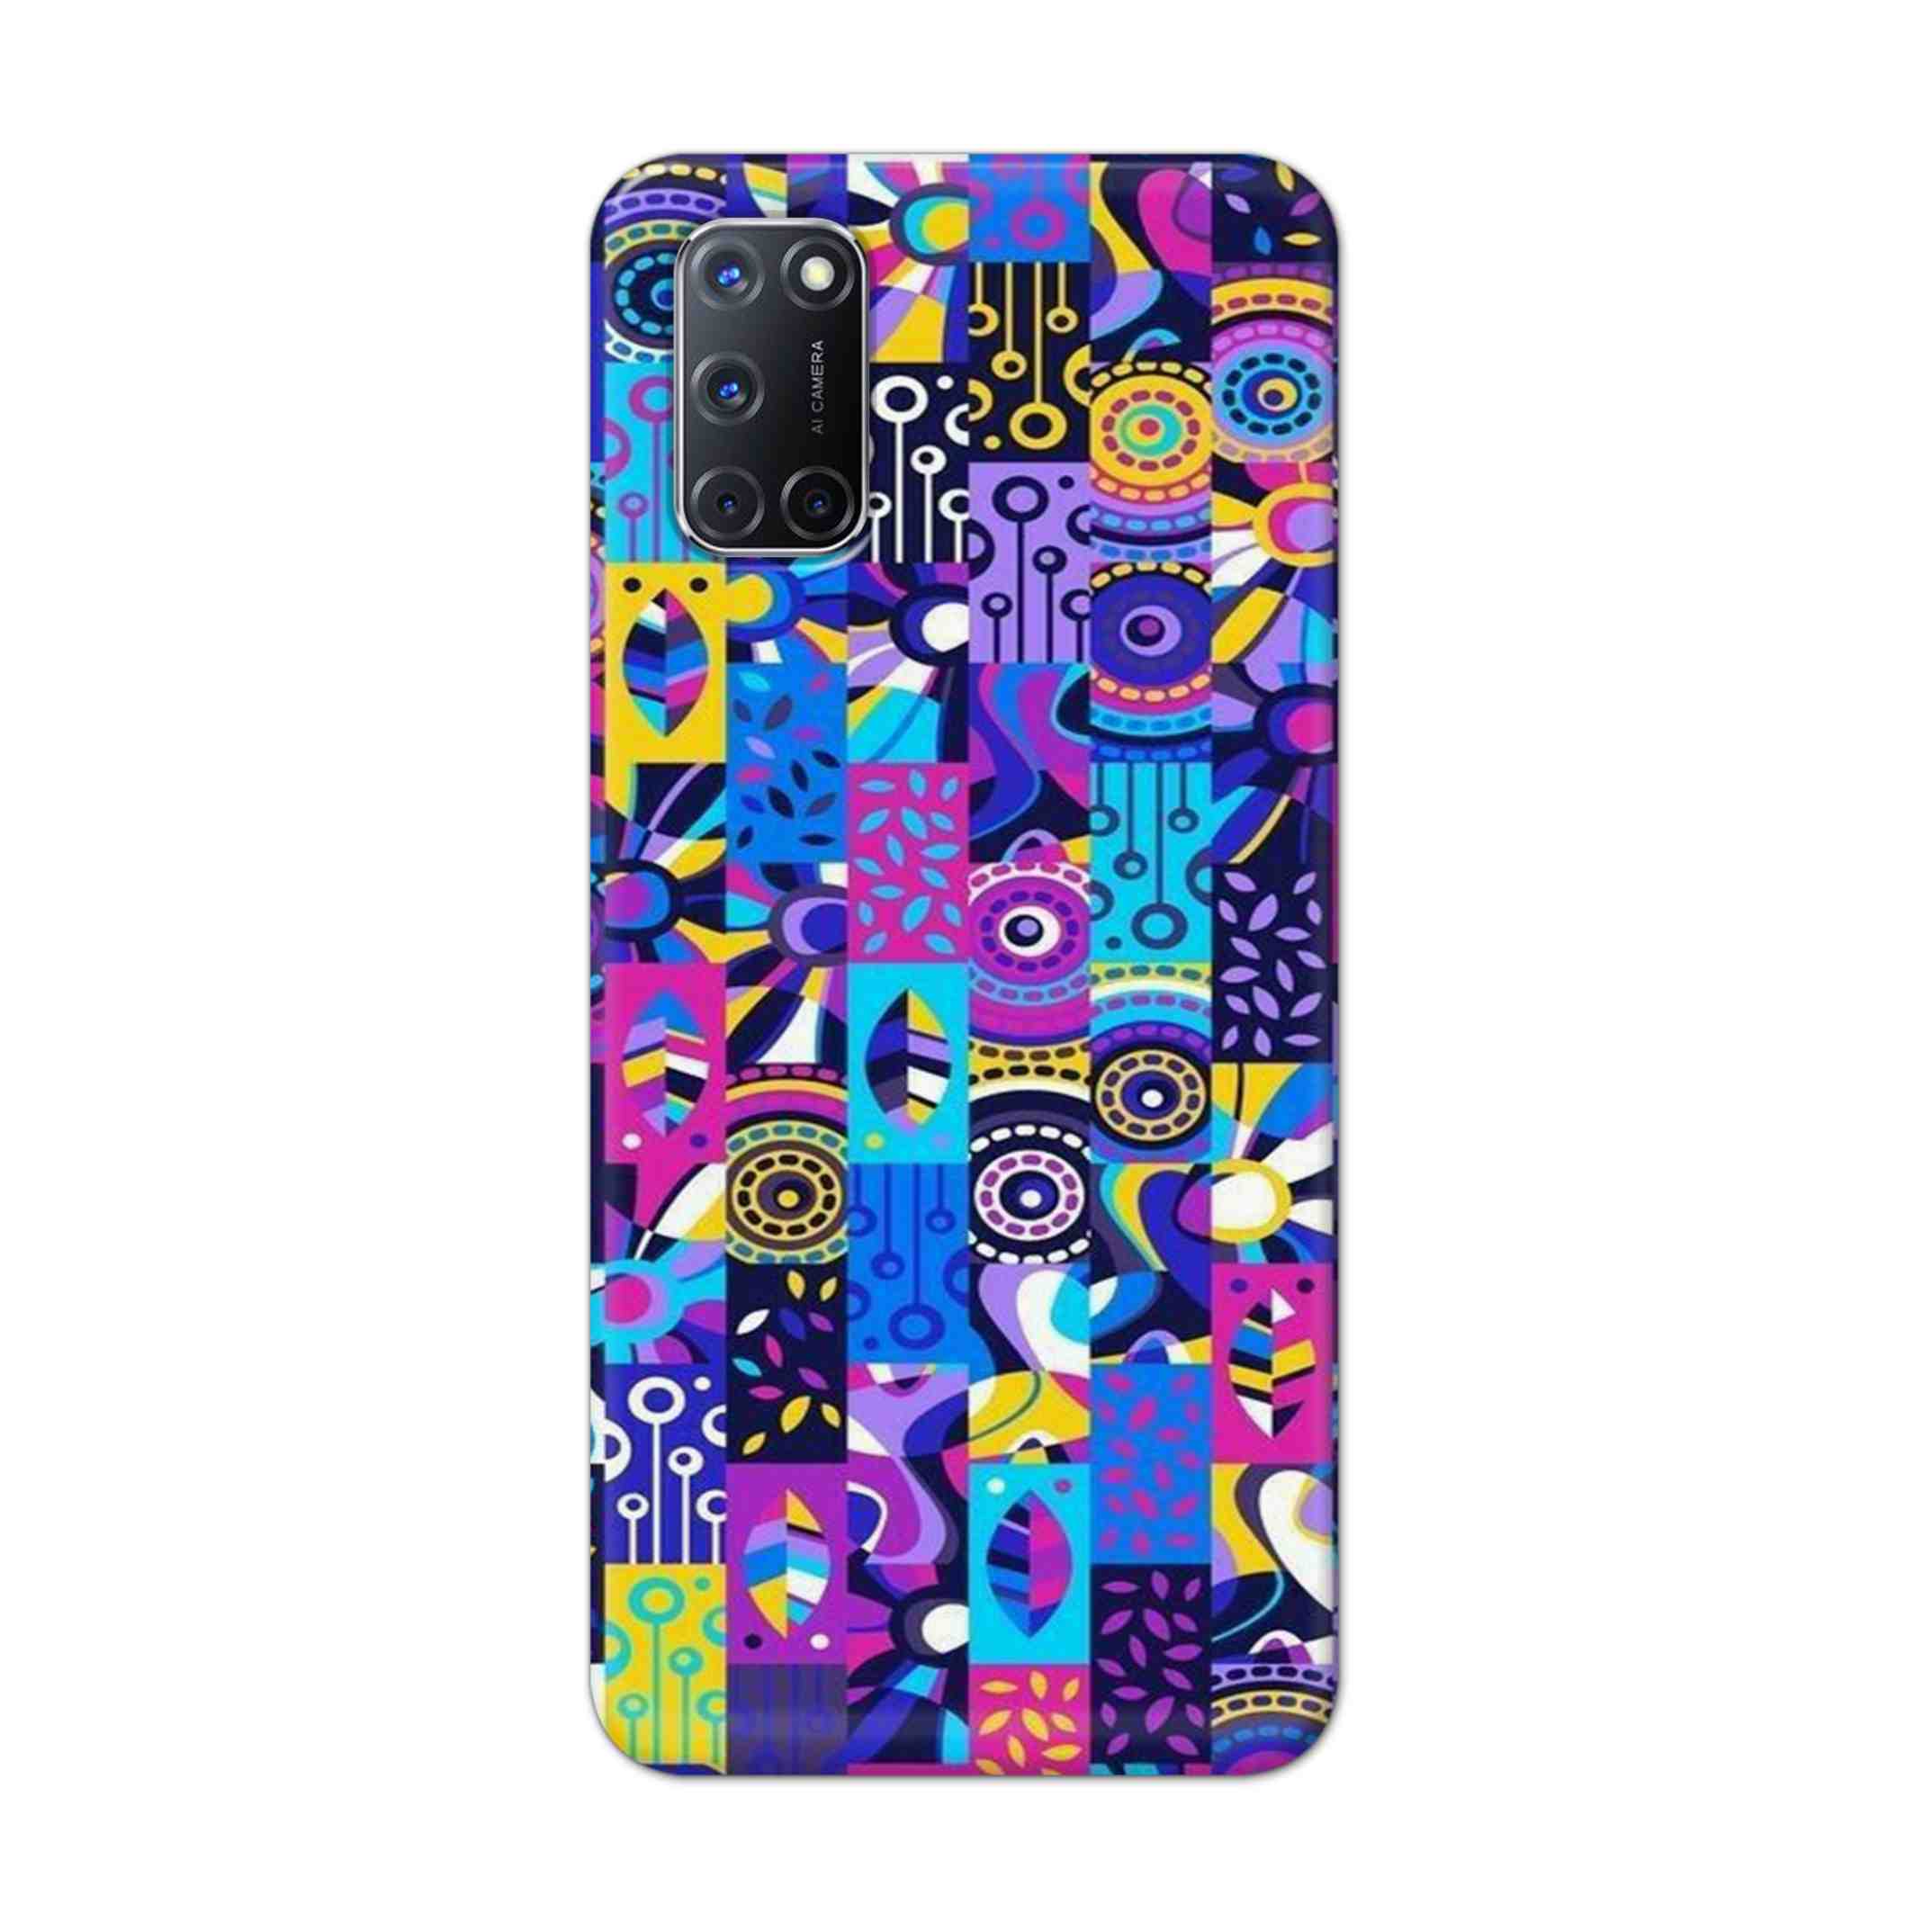 Buy Rainbow Art Hard Back Mobile Phone Case Cover For Oppo A52 Online